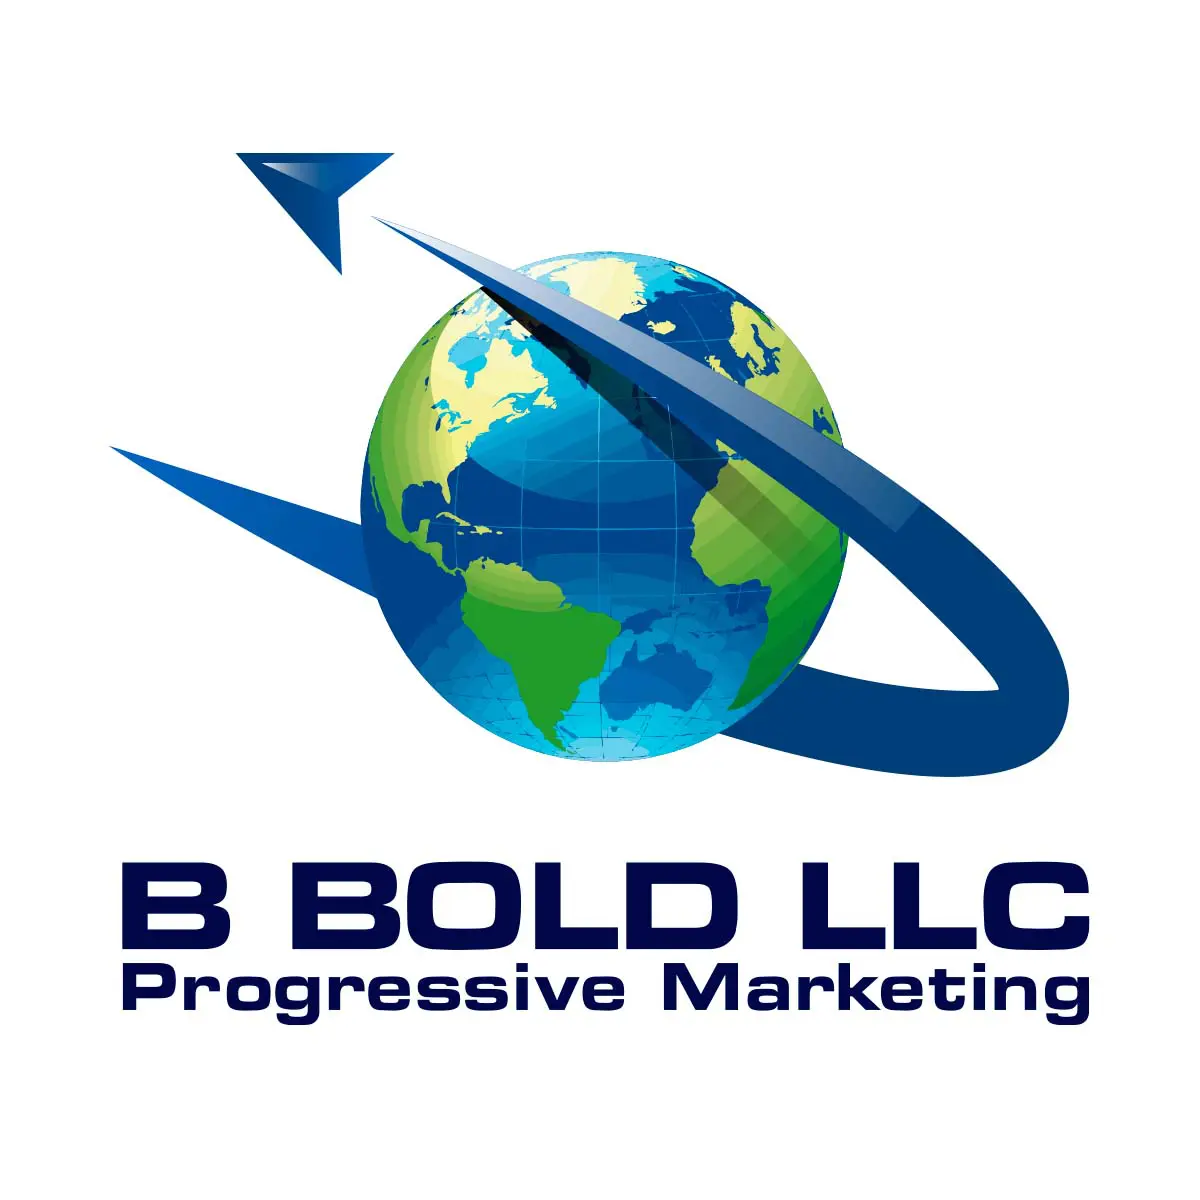 A logo of b bold llc progressive marketing